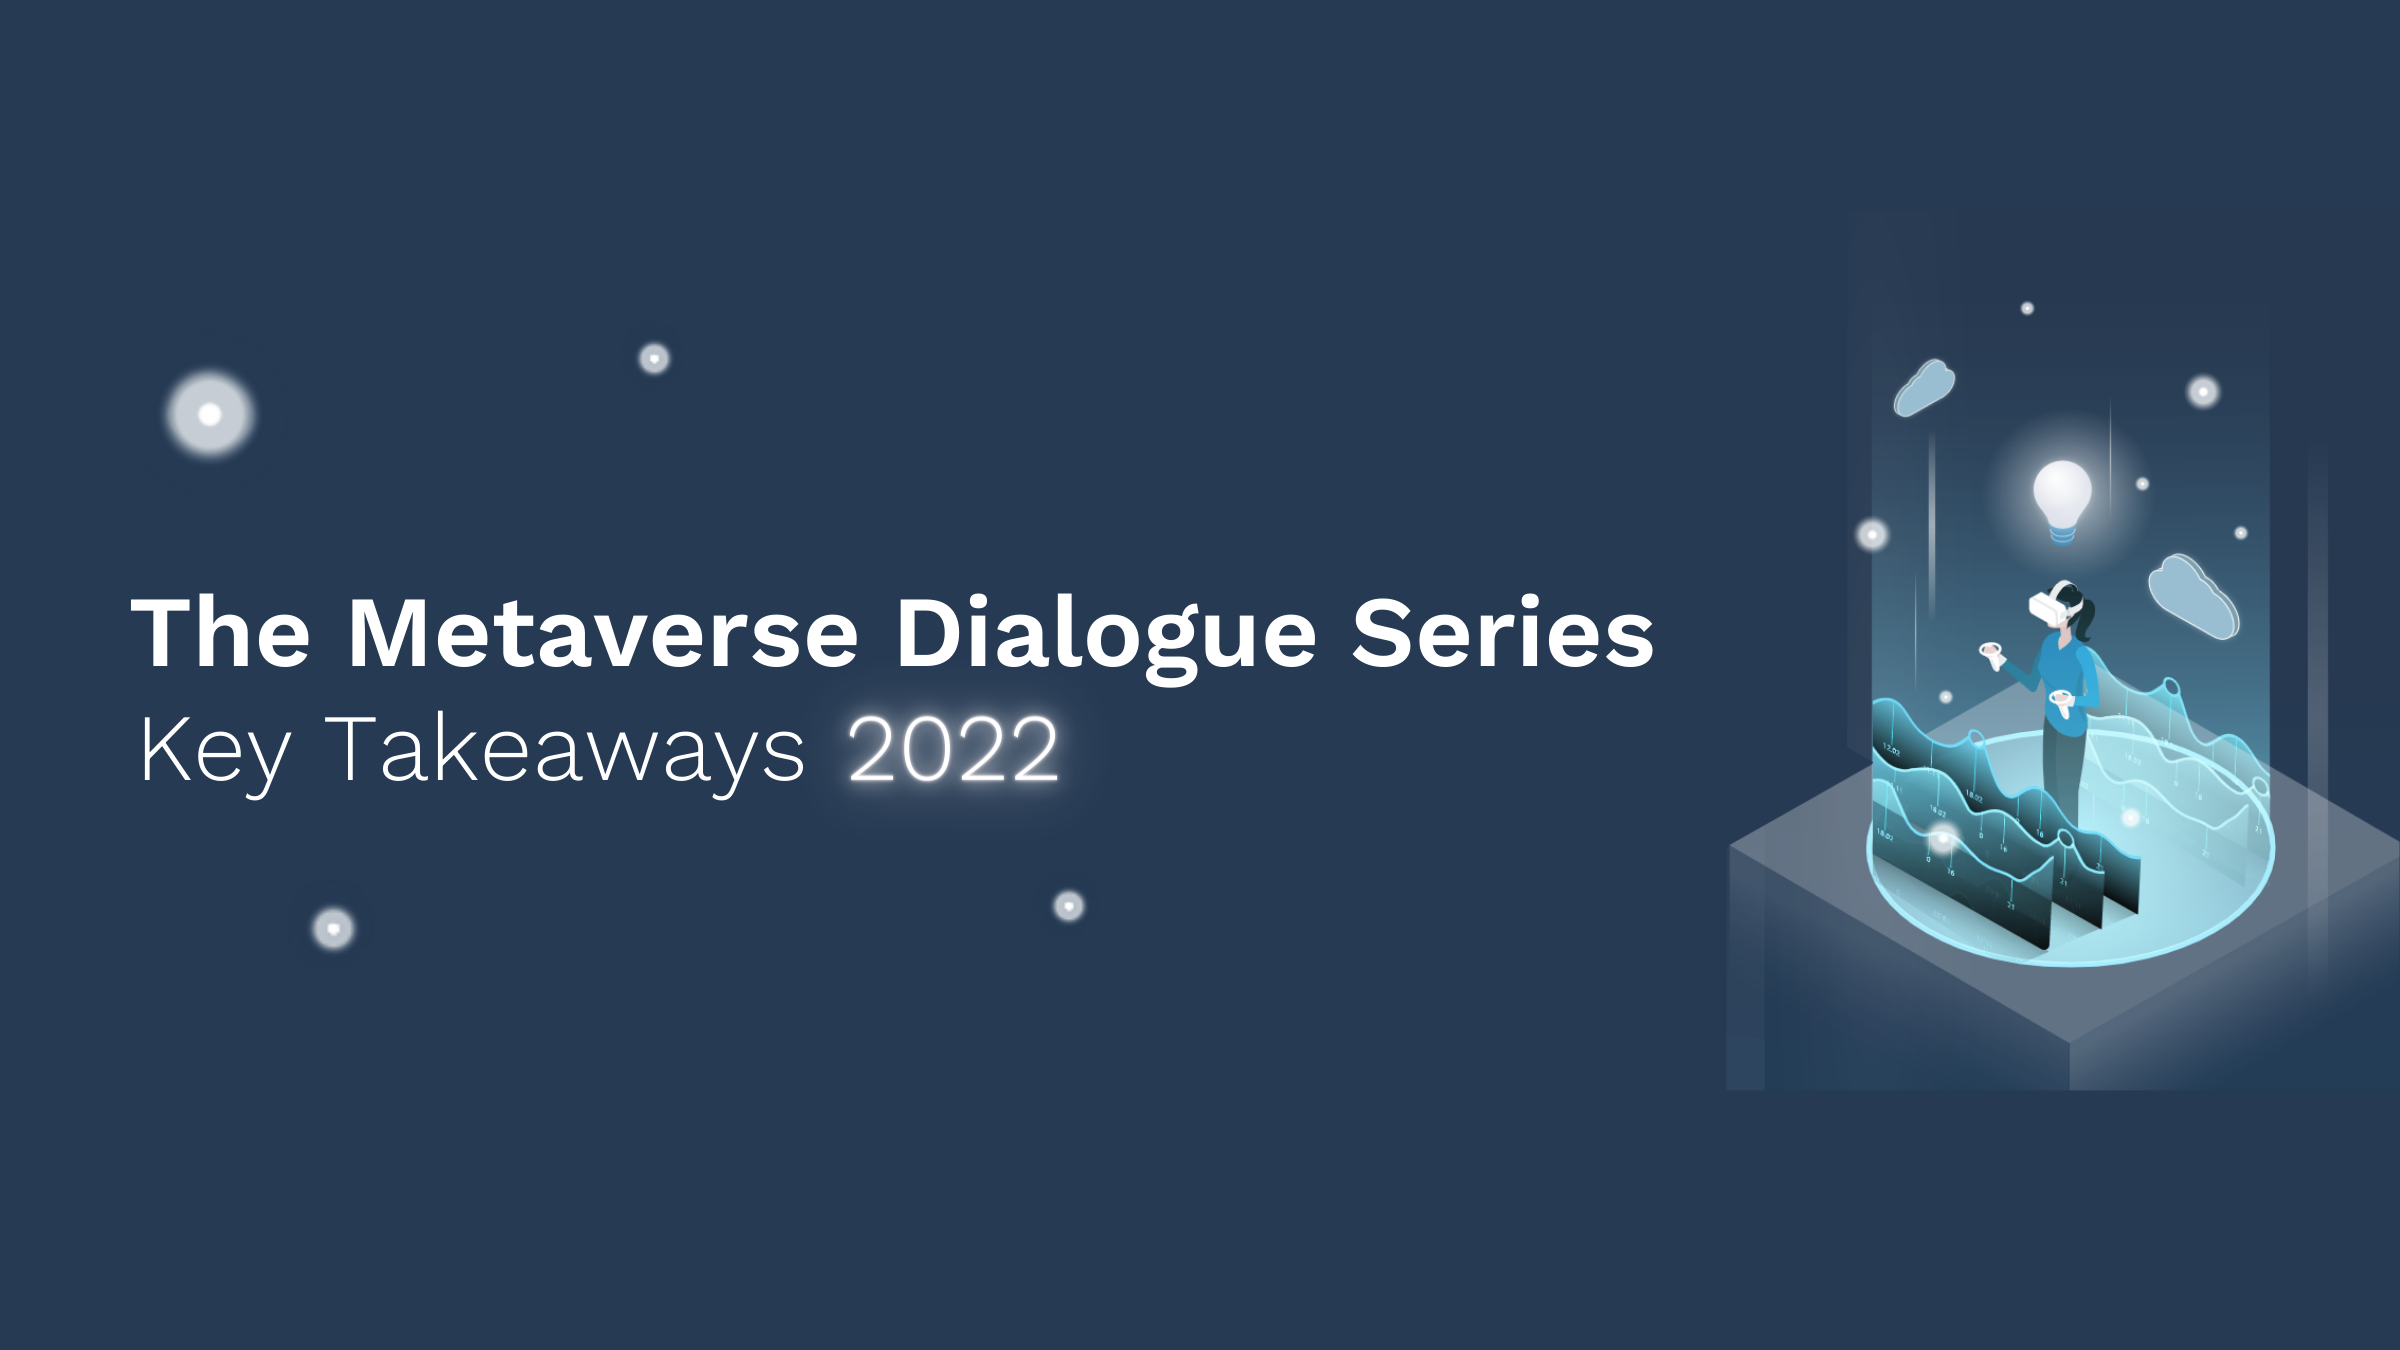 The Metaverse Dialogue Series Key Takeaways 2022